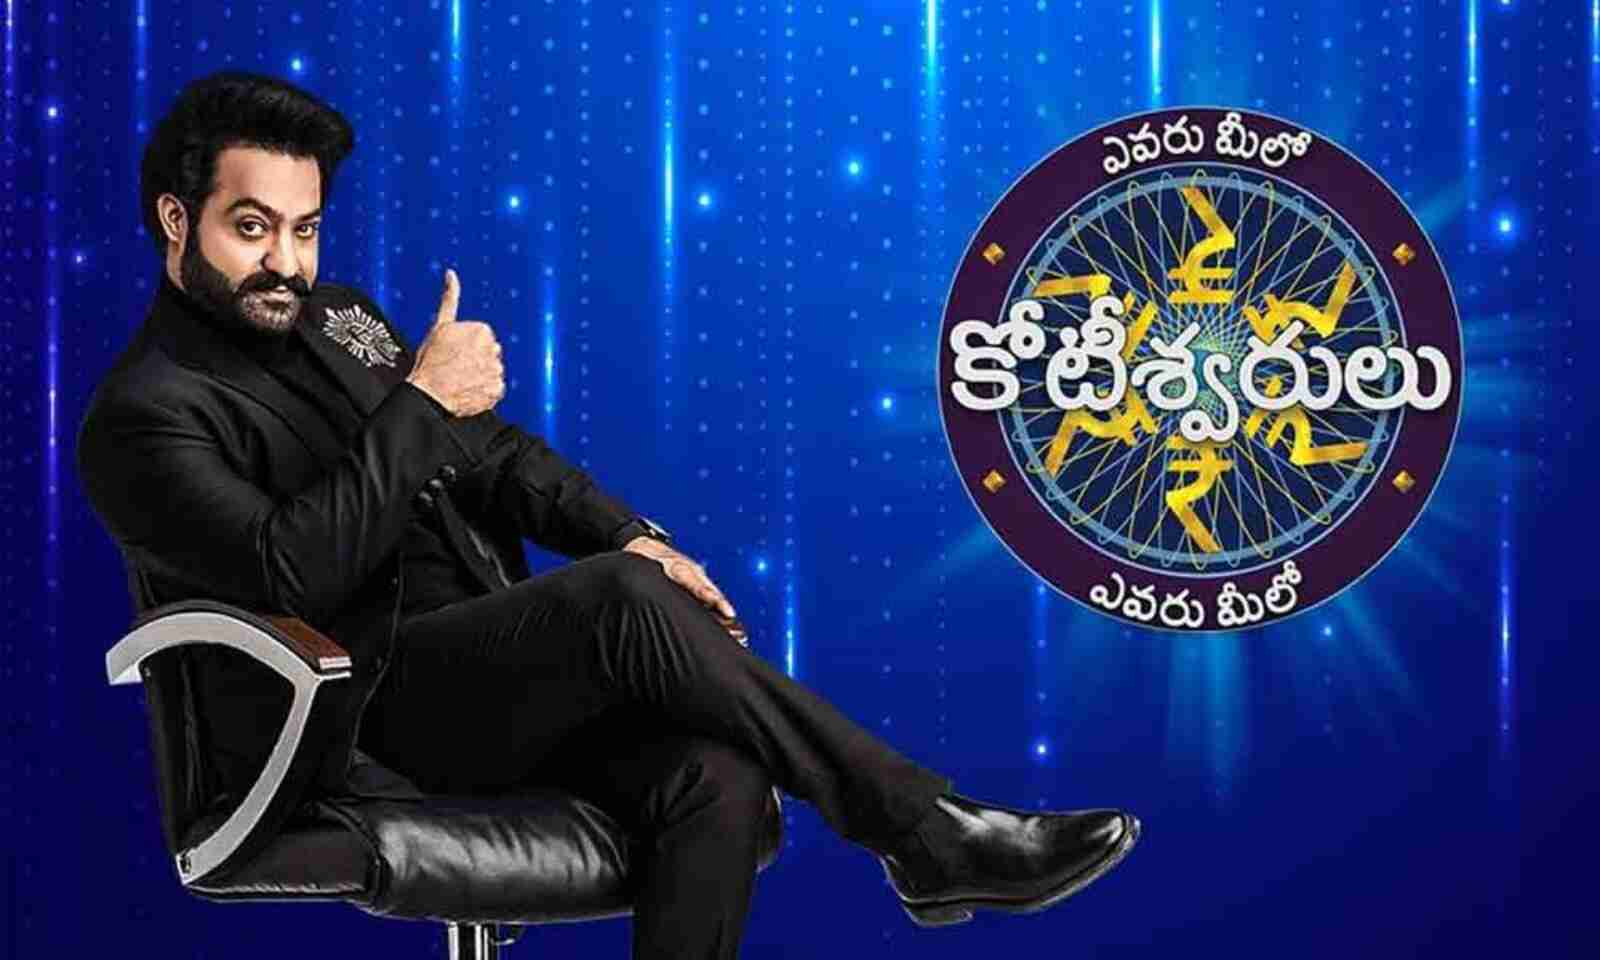 EMK, Bigg Boss set to storm thirsty Telugu viewers